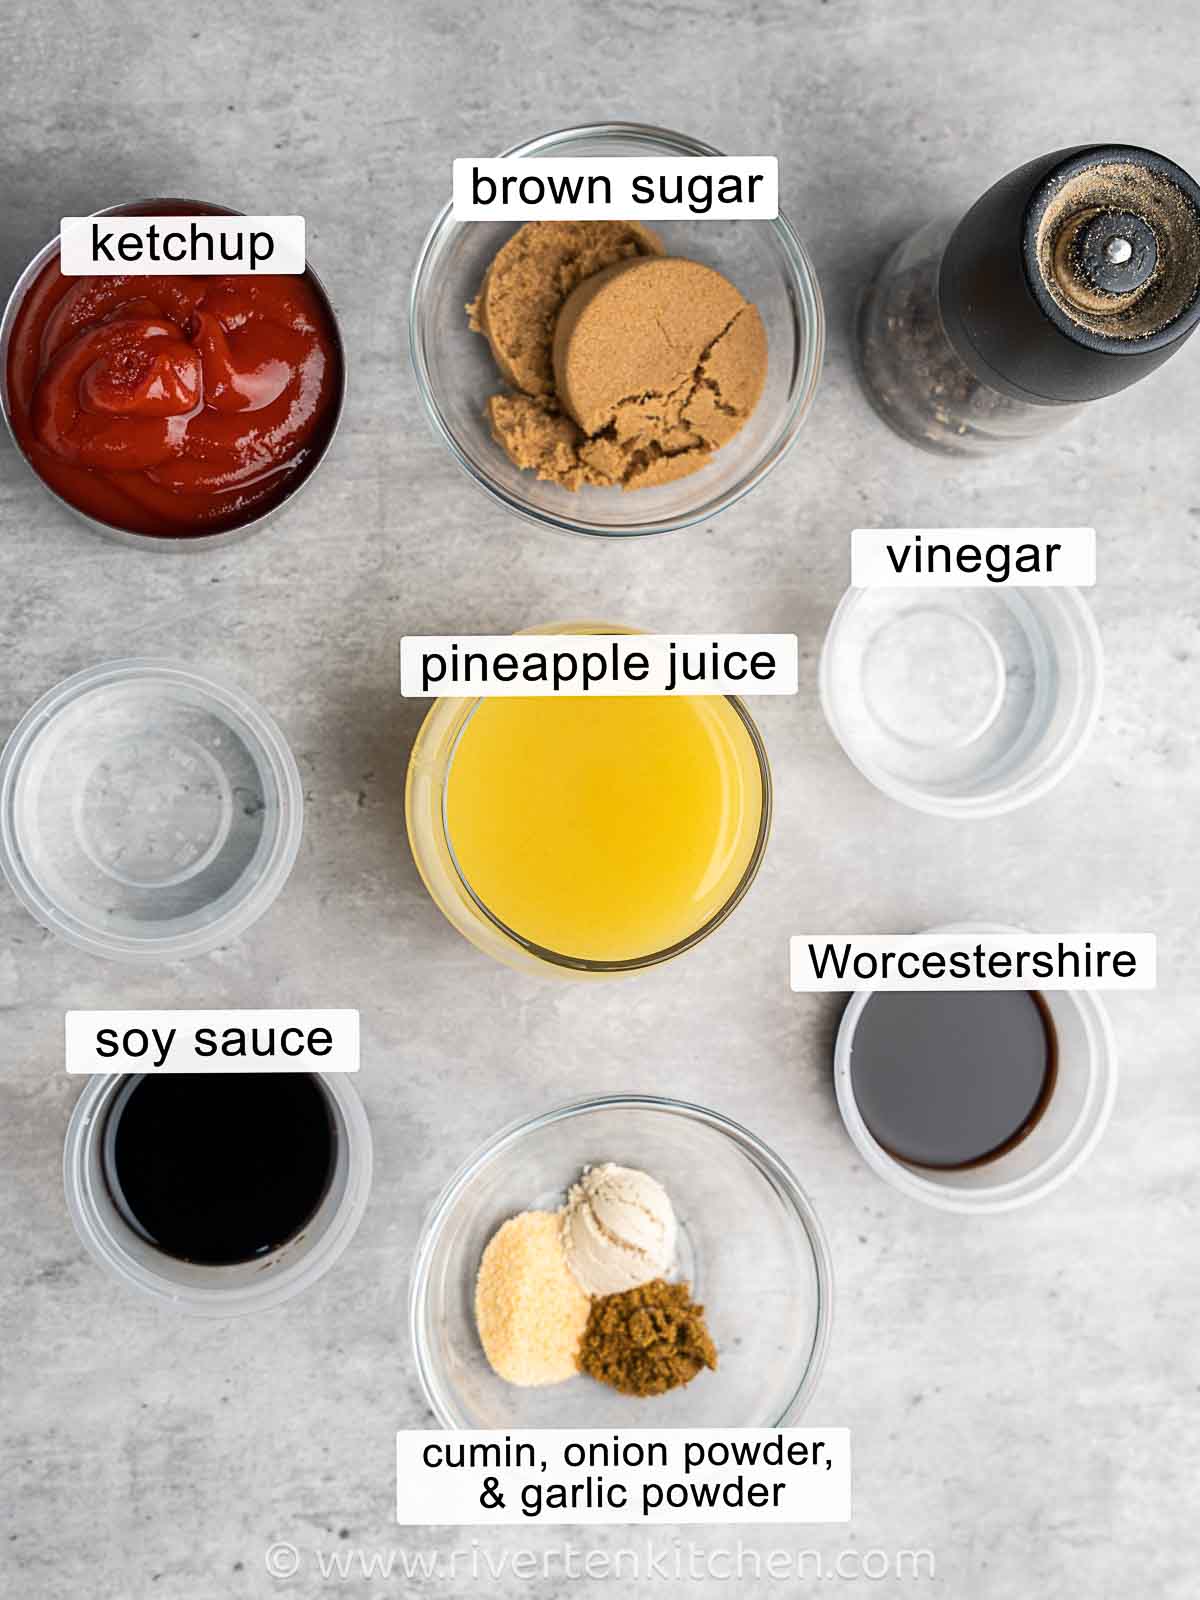 Ketchup, pineapple juice, soy sauce, Worcestershire sauce, cumin, onion powder, garlic powder, cumin, and vinegar.